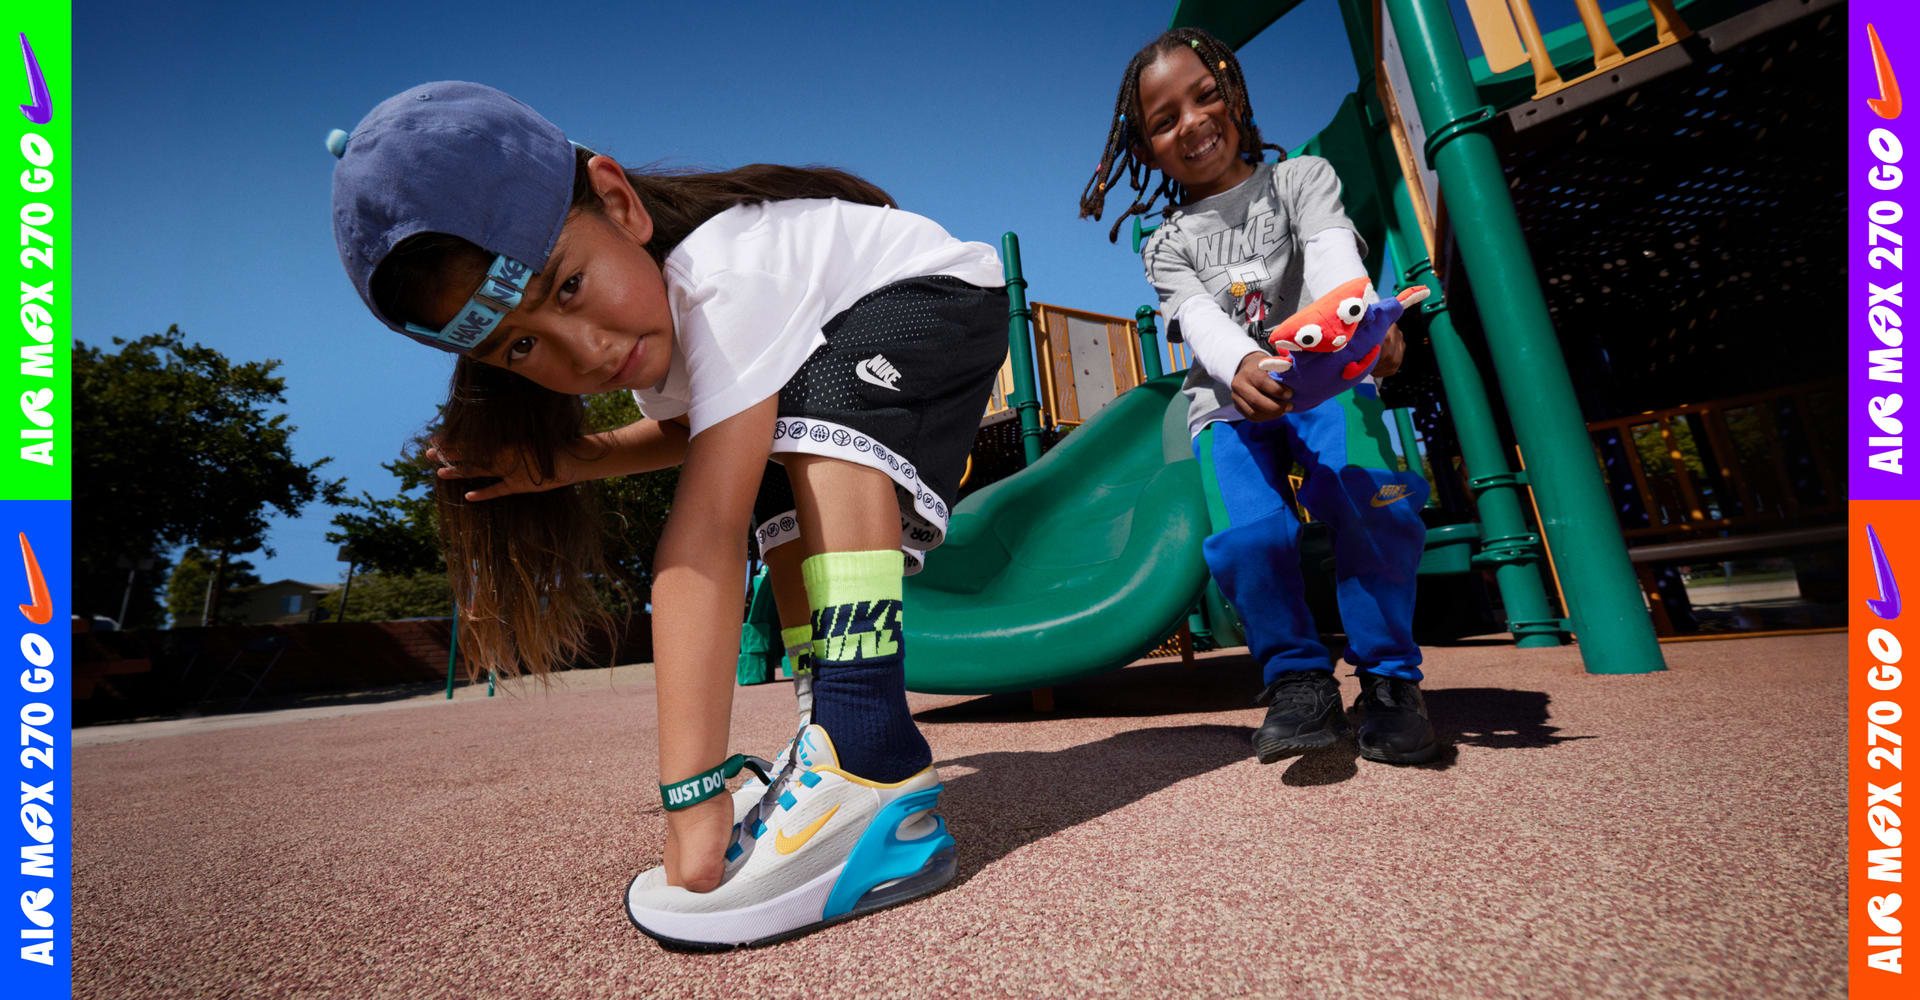 Nike Air Max 270 Little Kids' Shoes